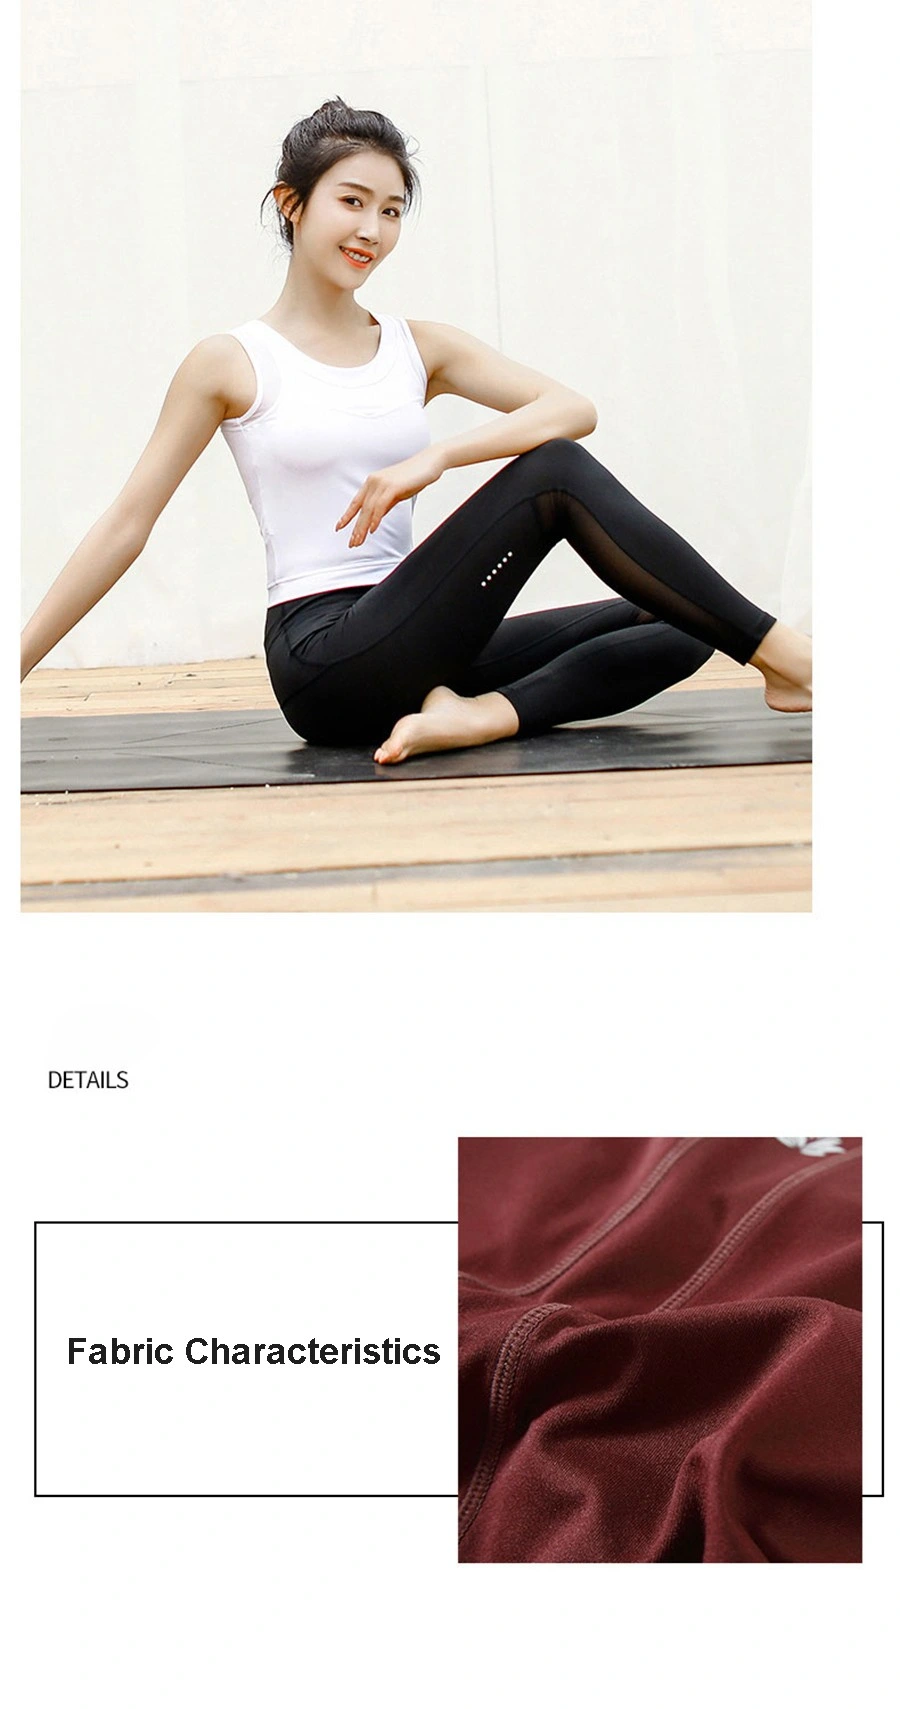 Wholesales Yoga Clothes Two Sets Sports Women Yoga Leggings Pants